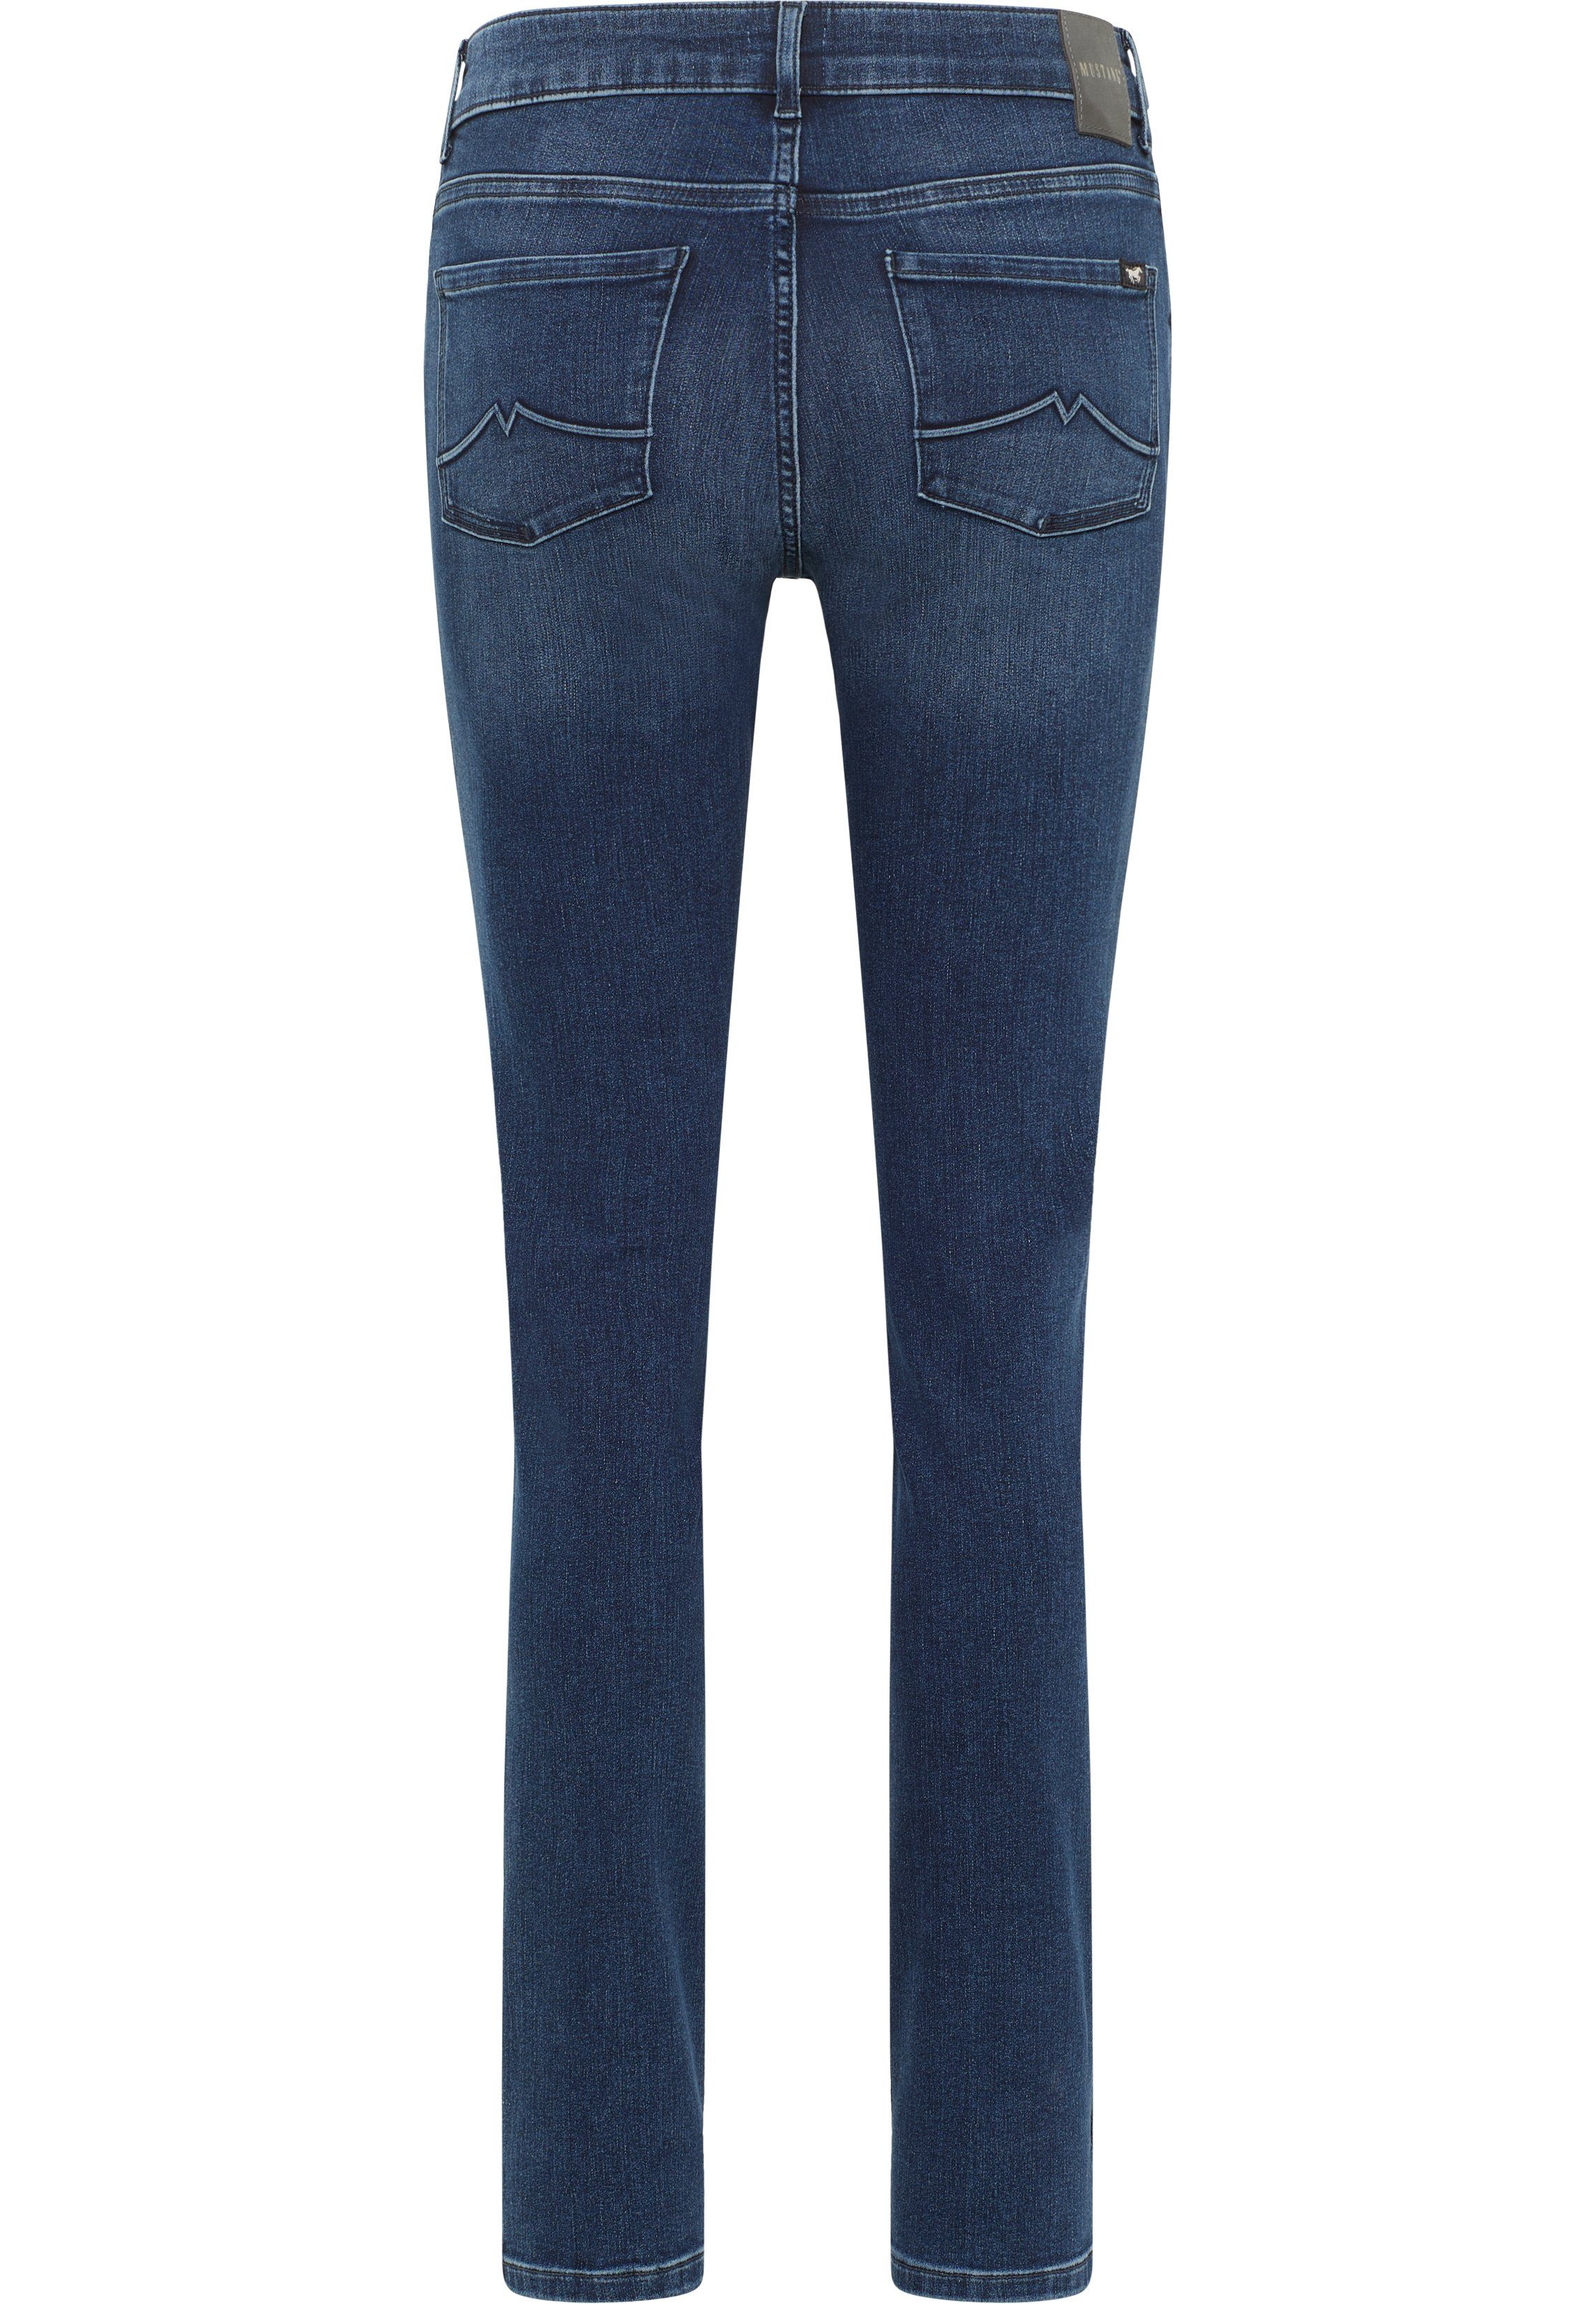 MUSTANG Slim-fit-Jeans Slim dunkelblau-5000802 Style Relaxed Crosby